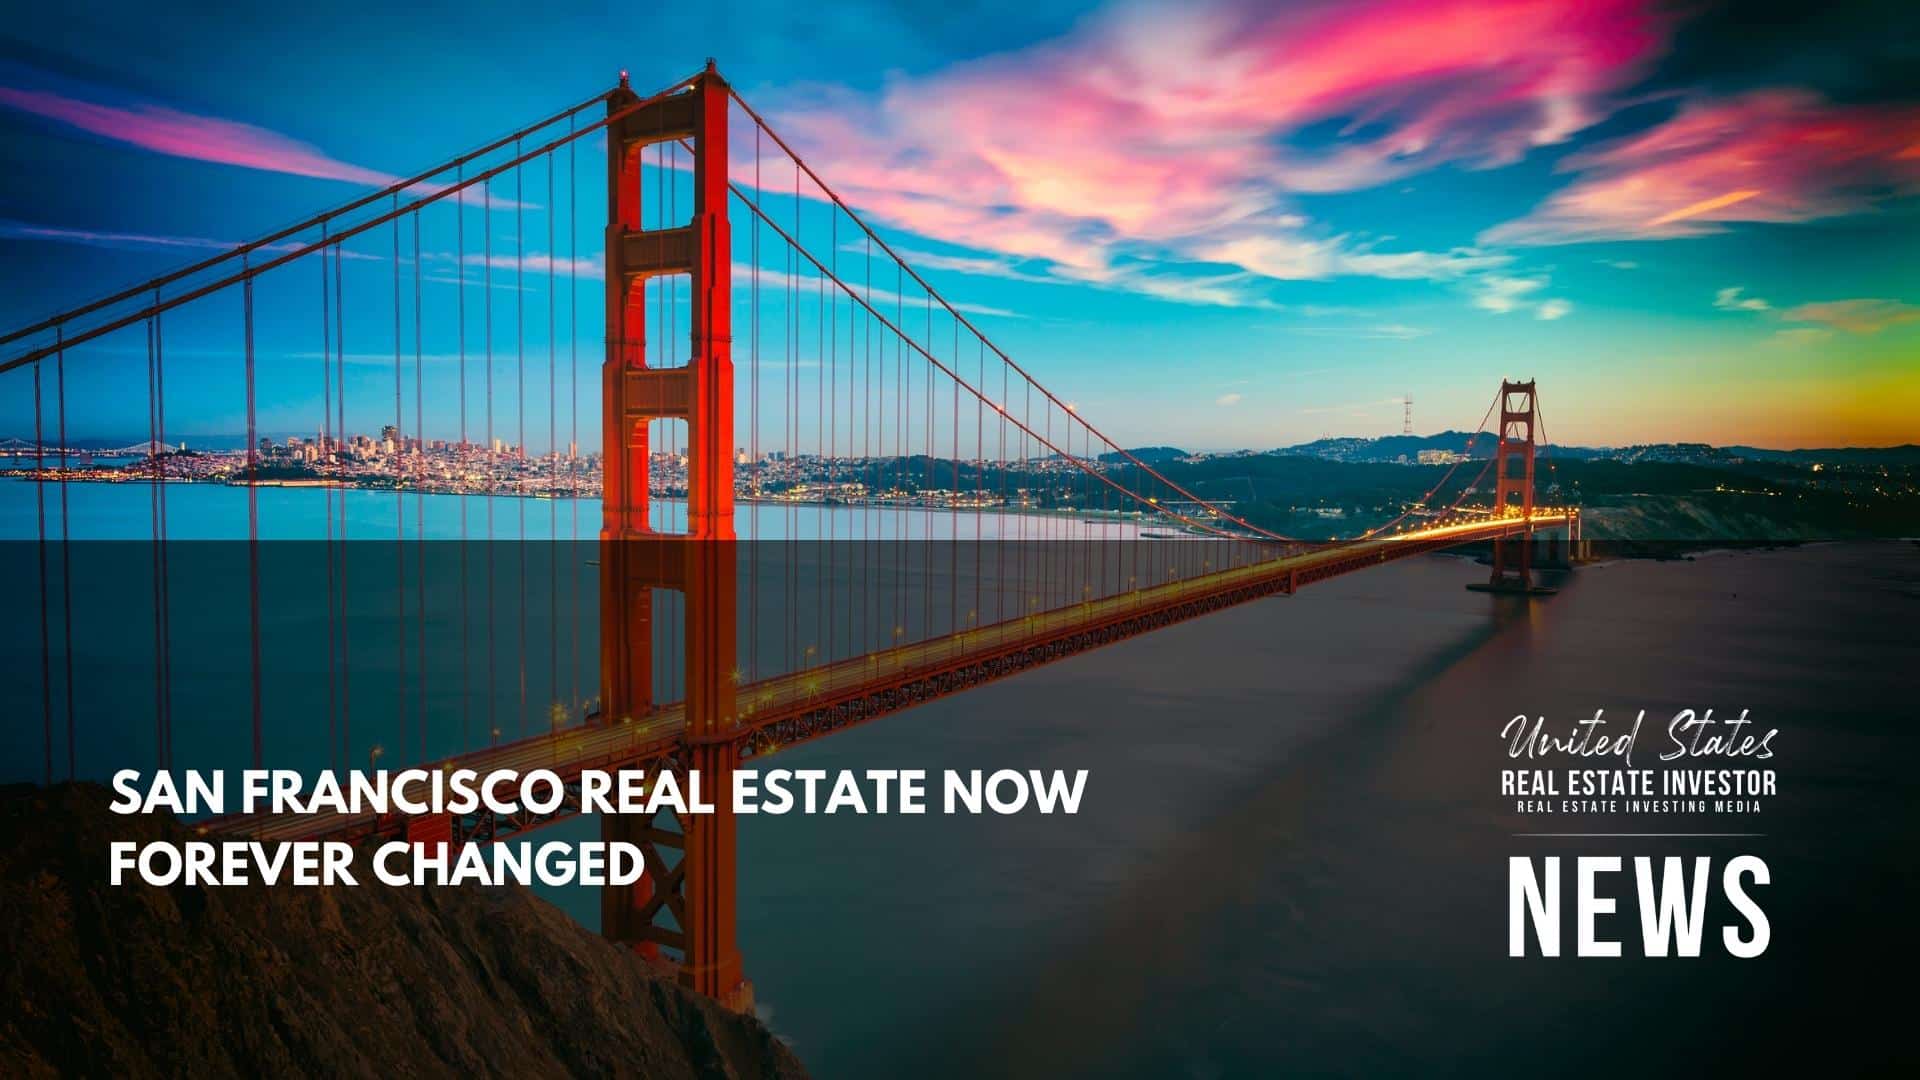 United States Real Estate Investor - Real estate investing media - San Francisco Real Estate Now Forever Changed